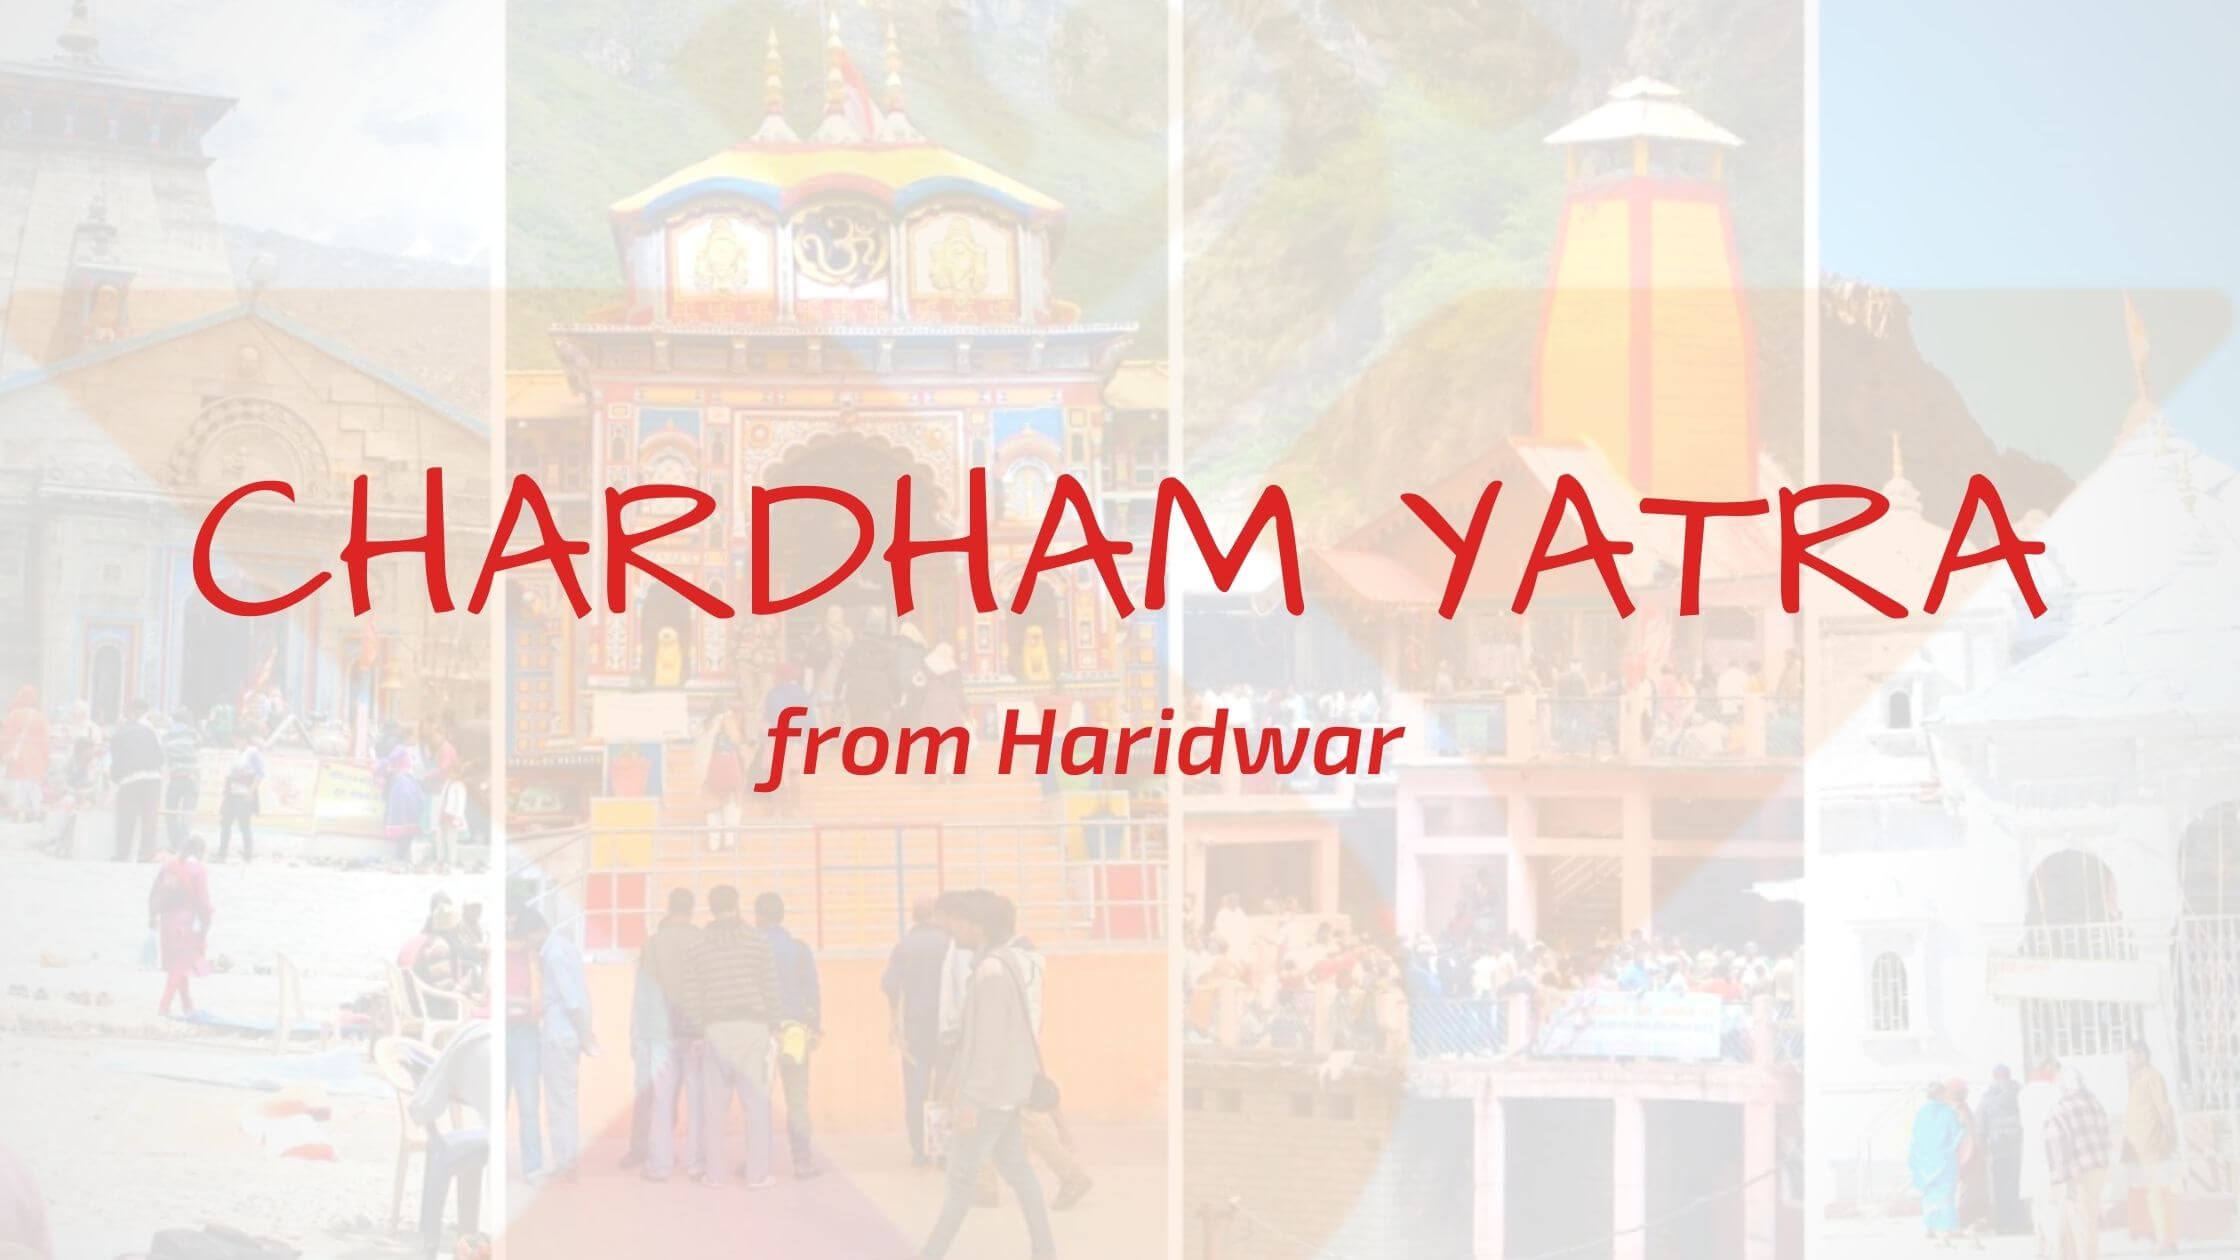 Chardham yatra Tour from Haridwar